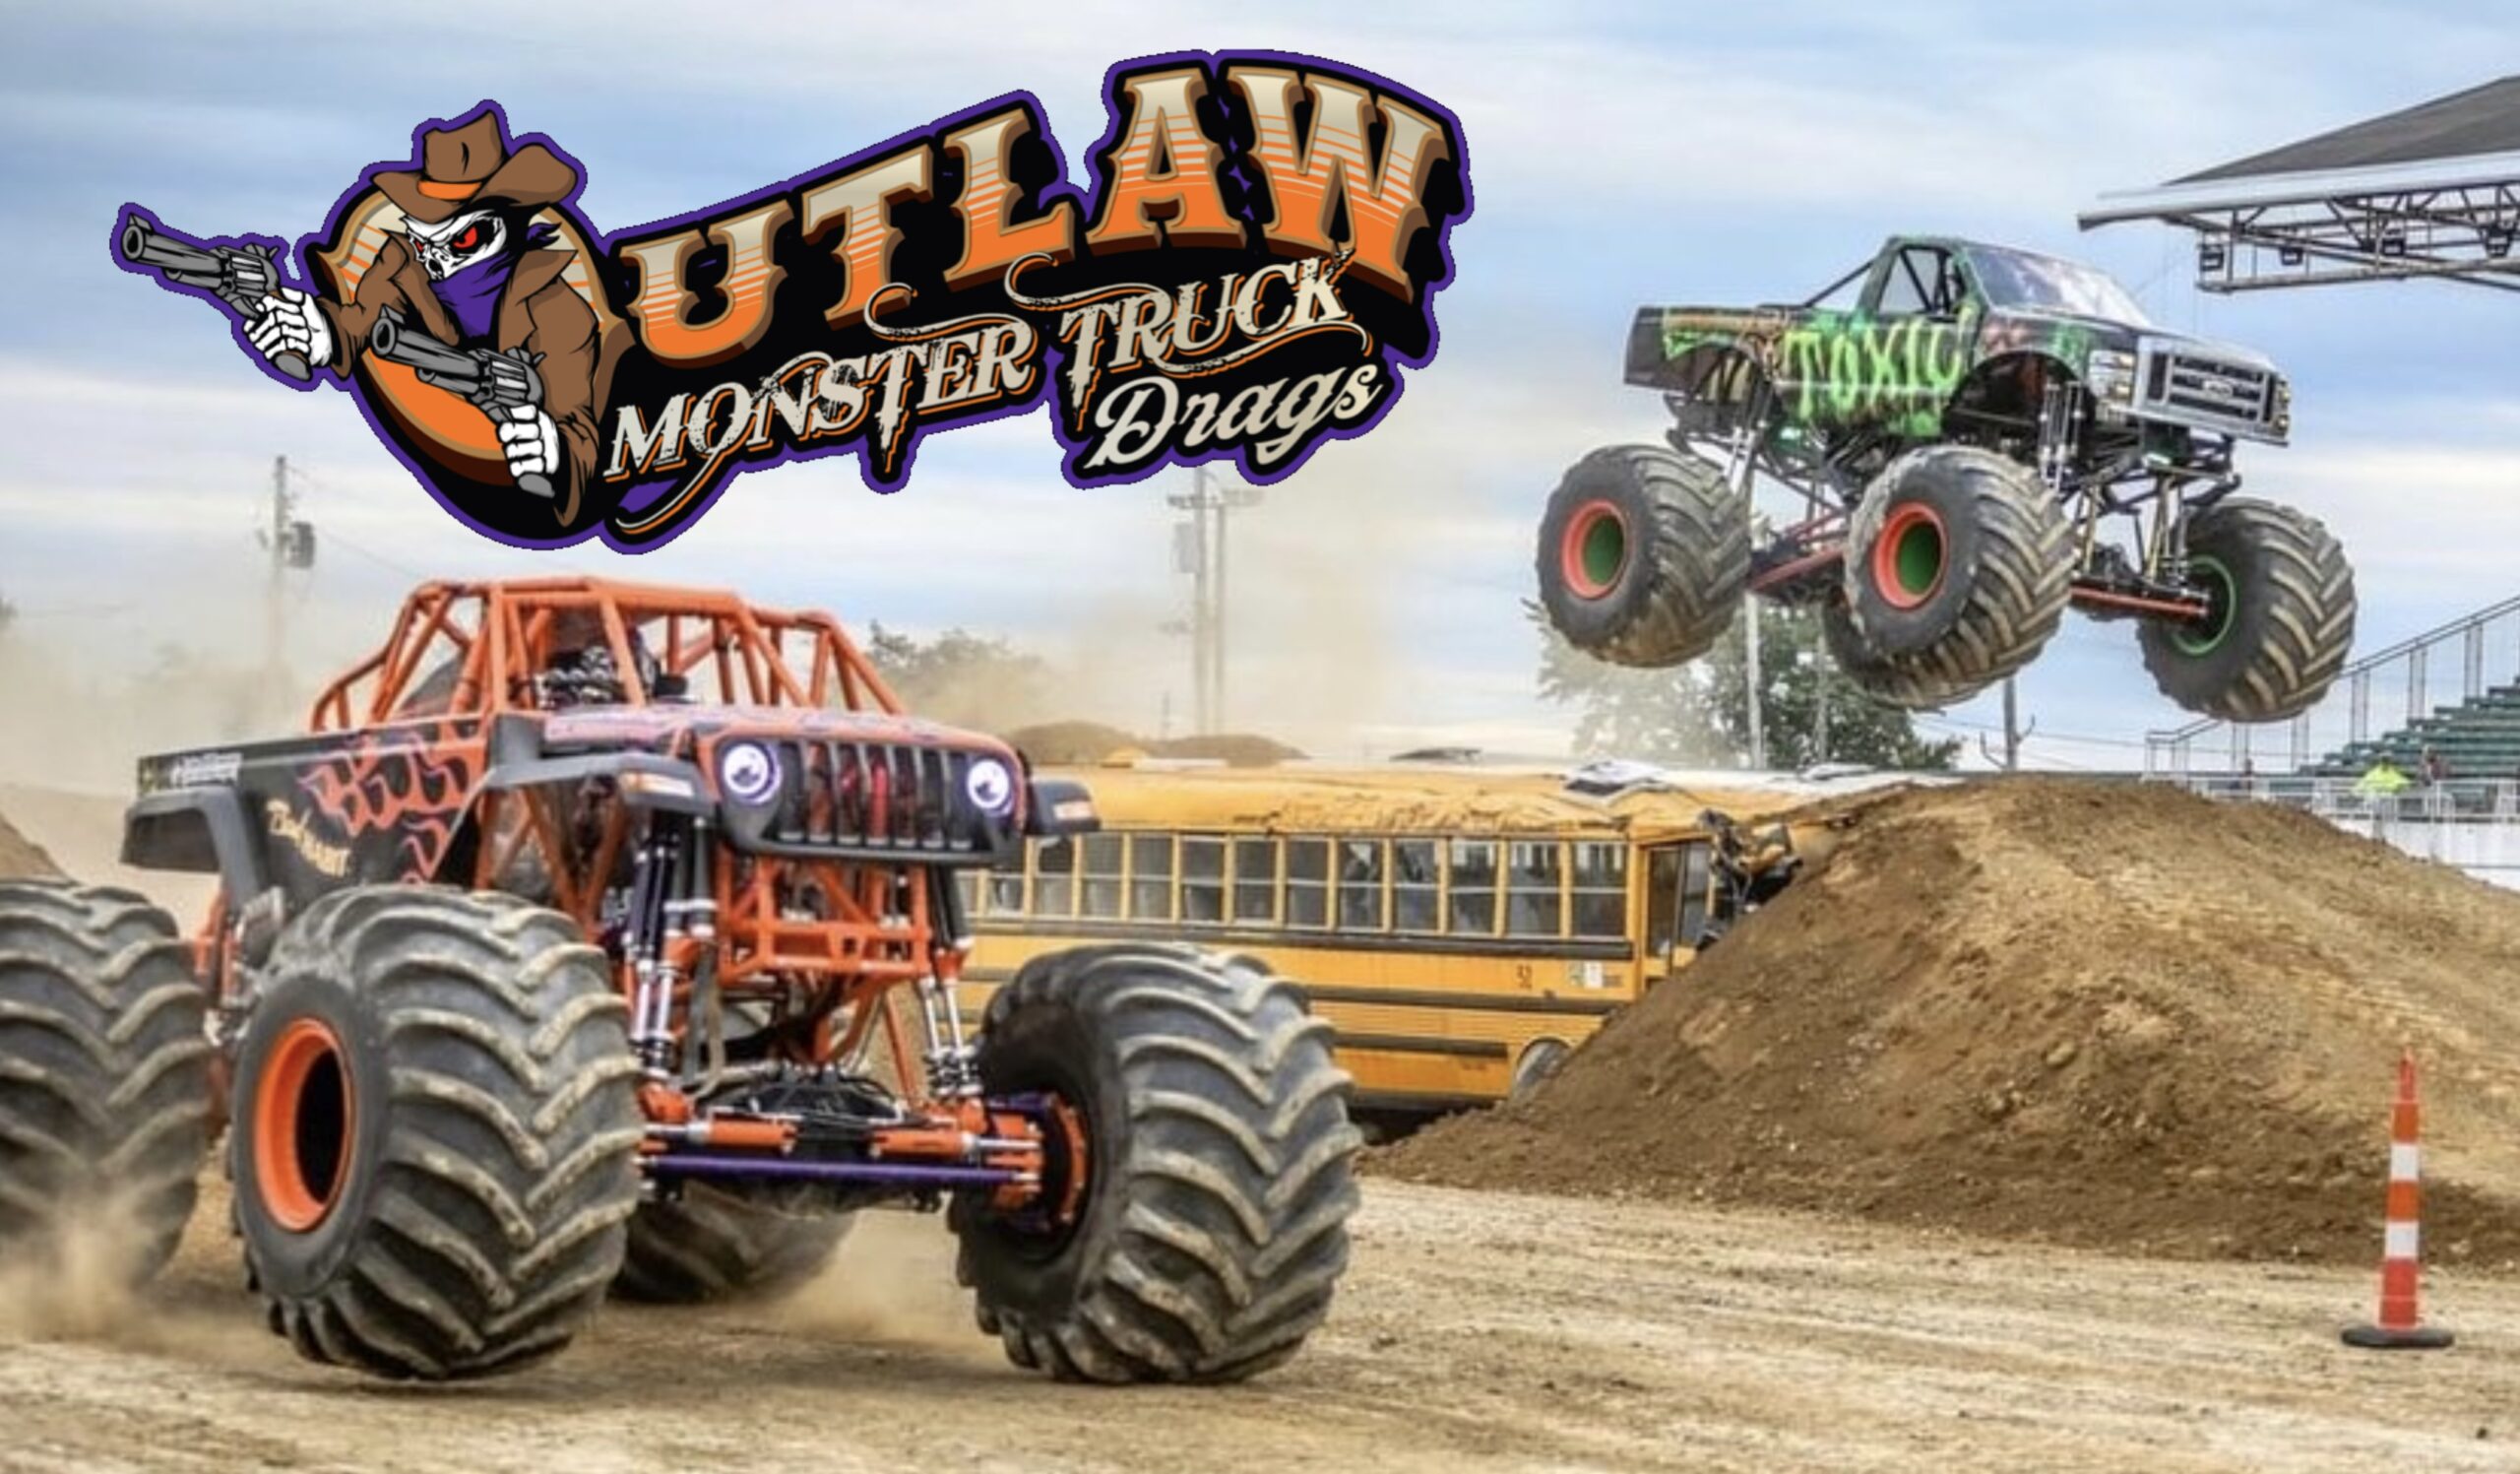 Outlaw Monster Truck Drags